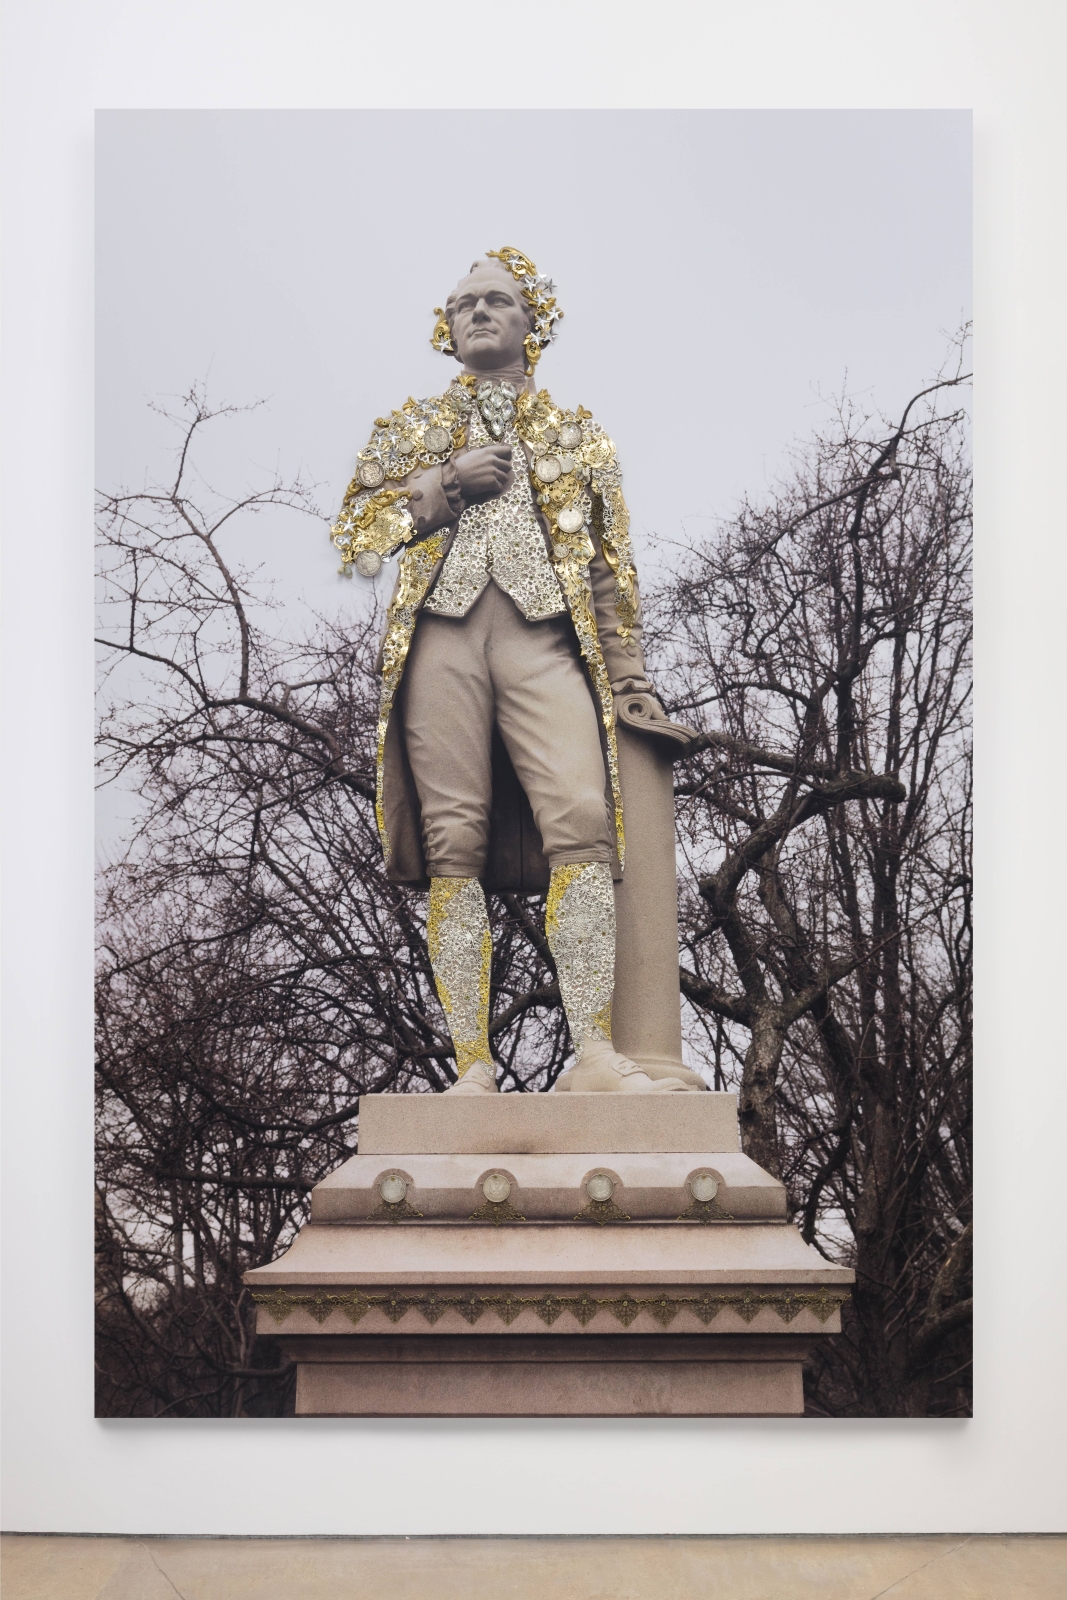 Hew Locke
Hamilton, Central Park, 2018
c-type photograph with mixed media
72 x 48 ins.
182.9 x 121.9 cm